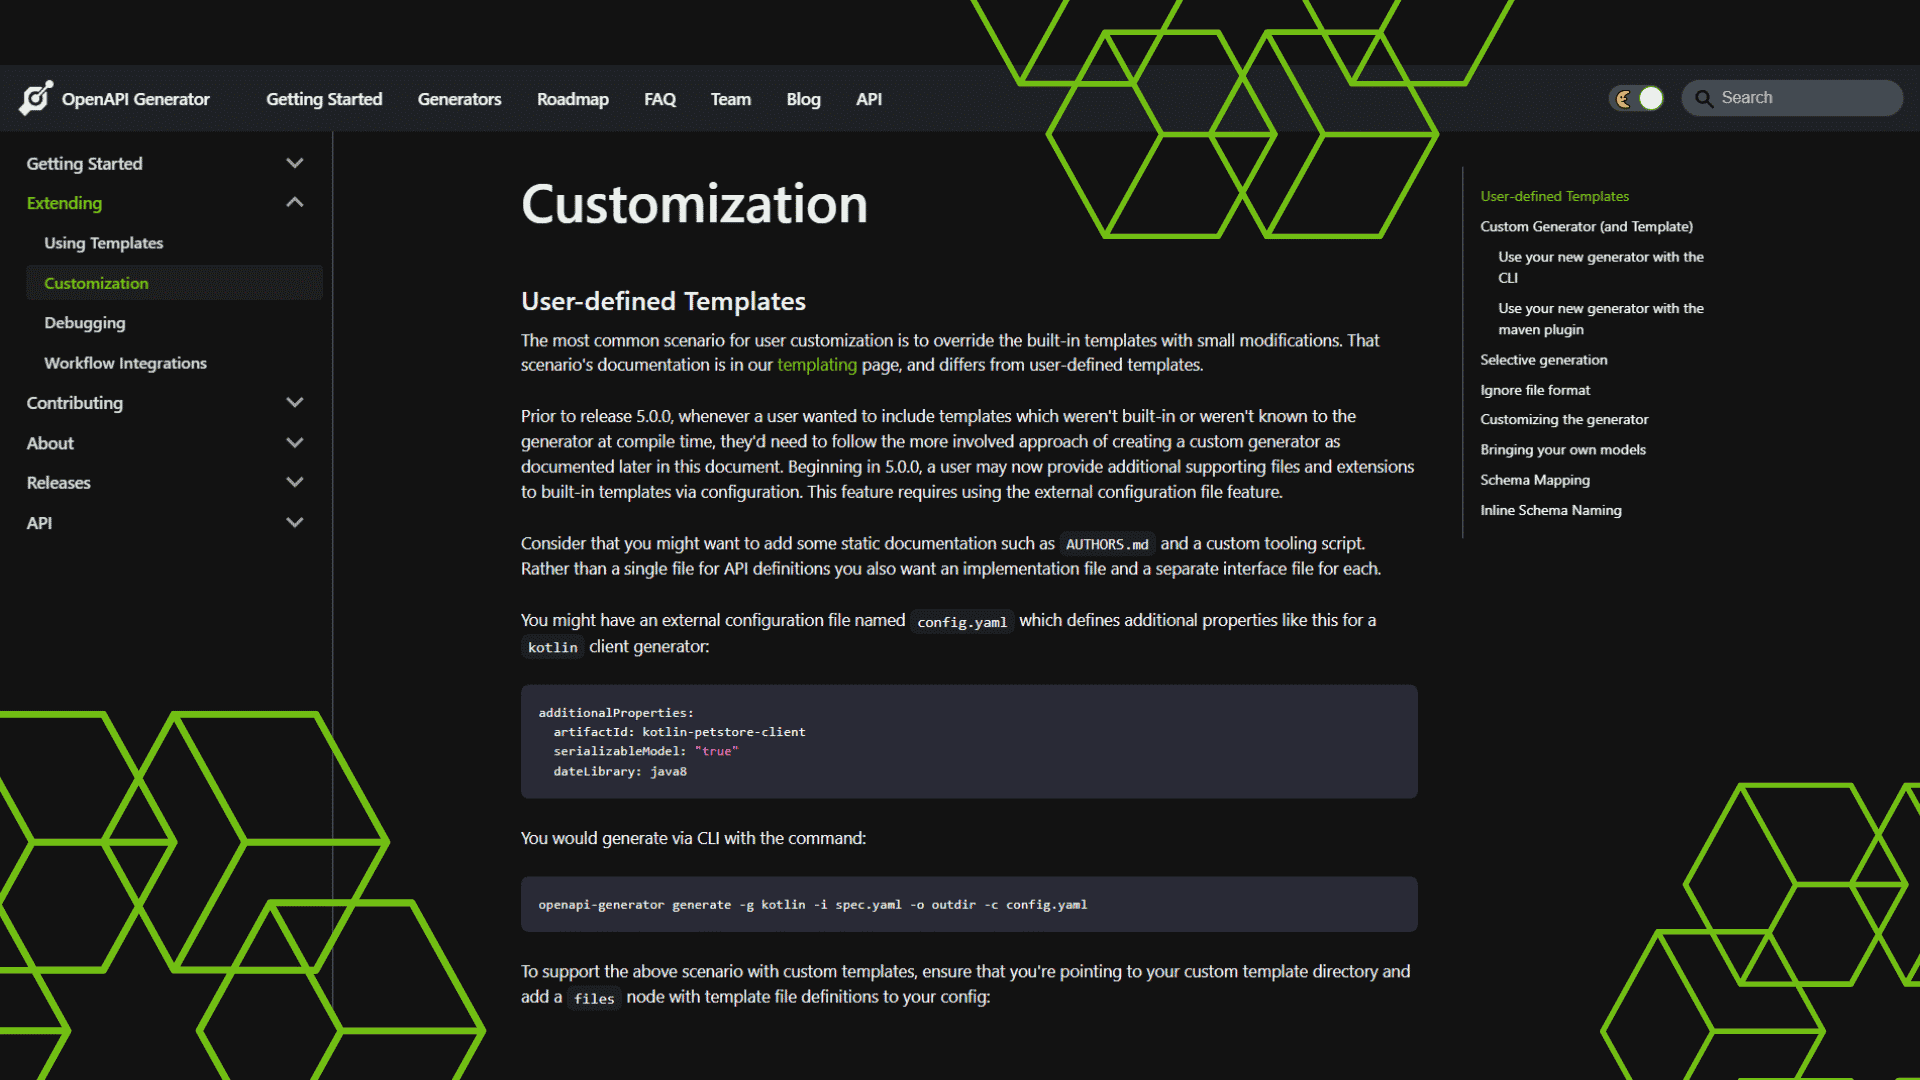 Key Features - Robust Customization Option